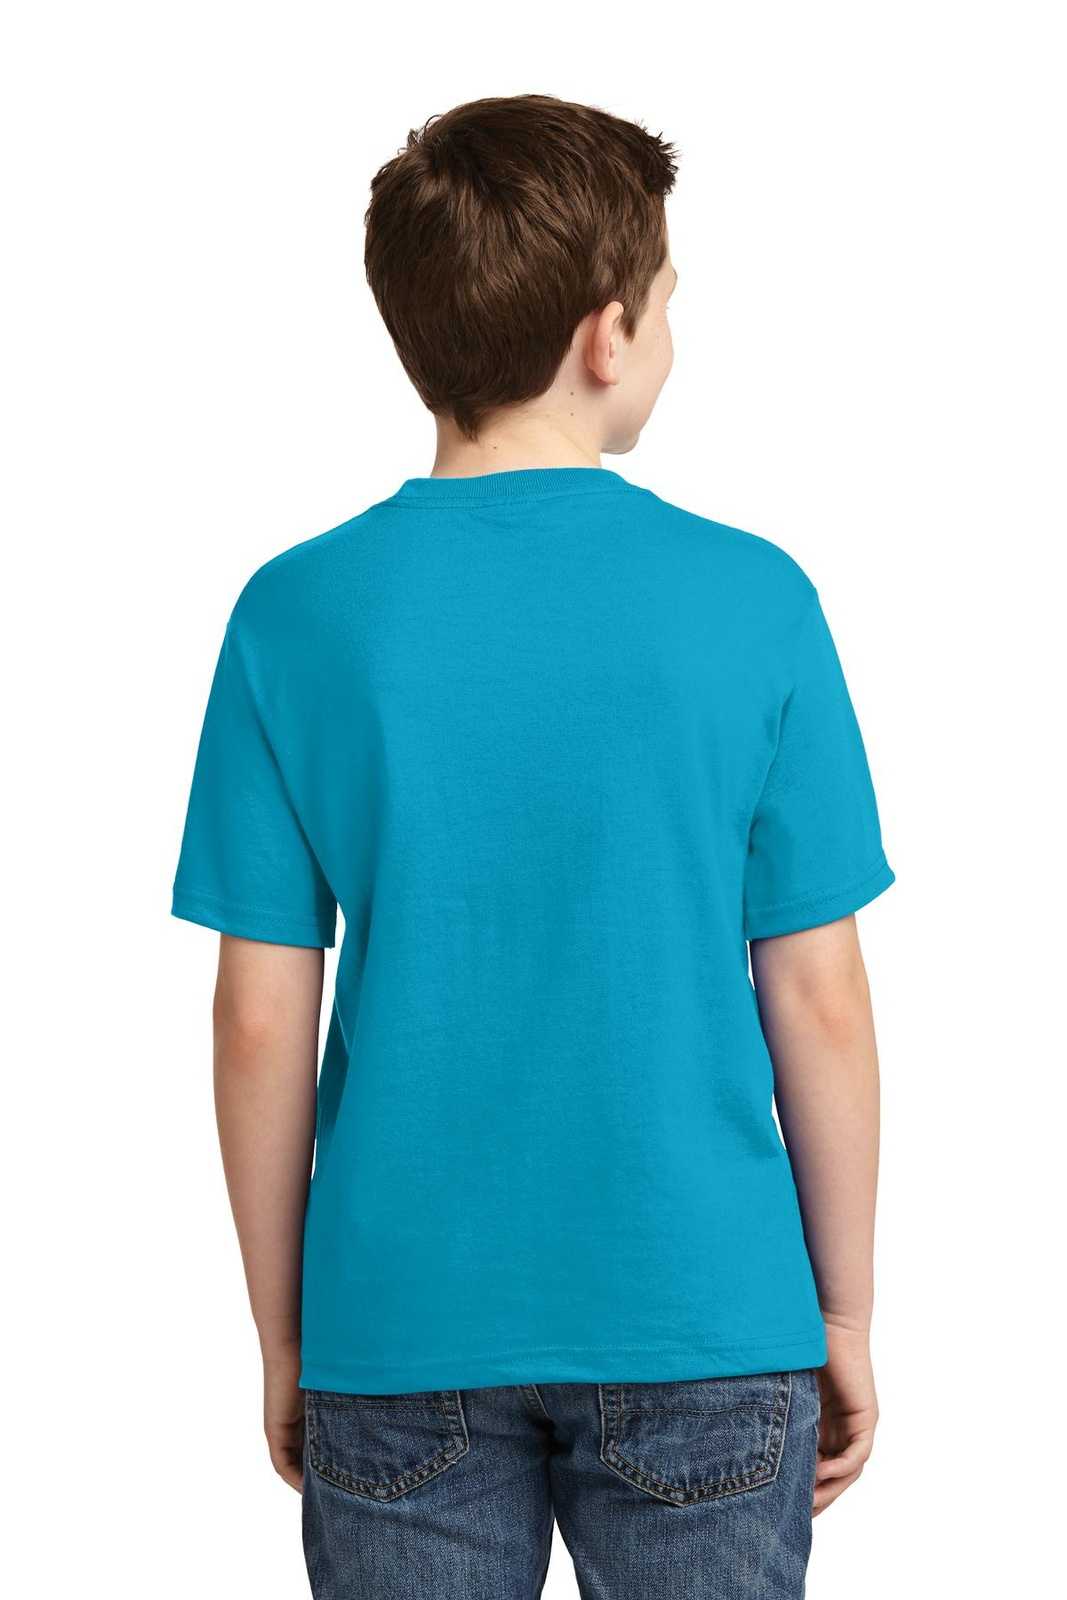 Jerzees 29B Youth Dri-Power 50/50 Cotton/Poly T-Shirt - California Blue - HIT a Double